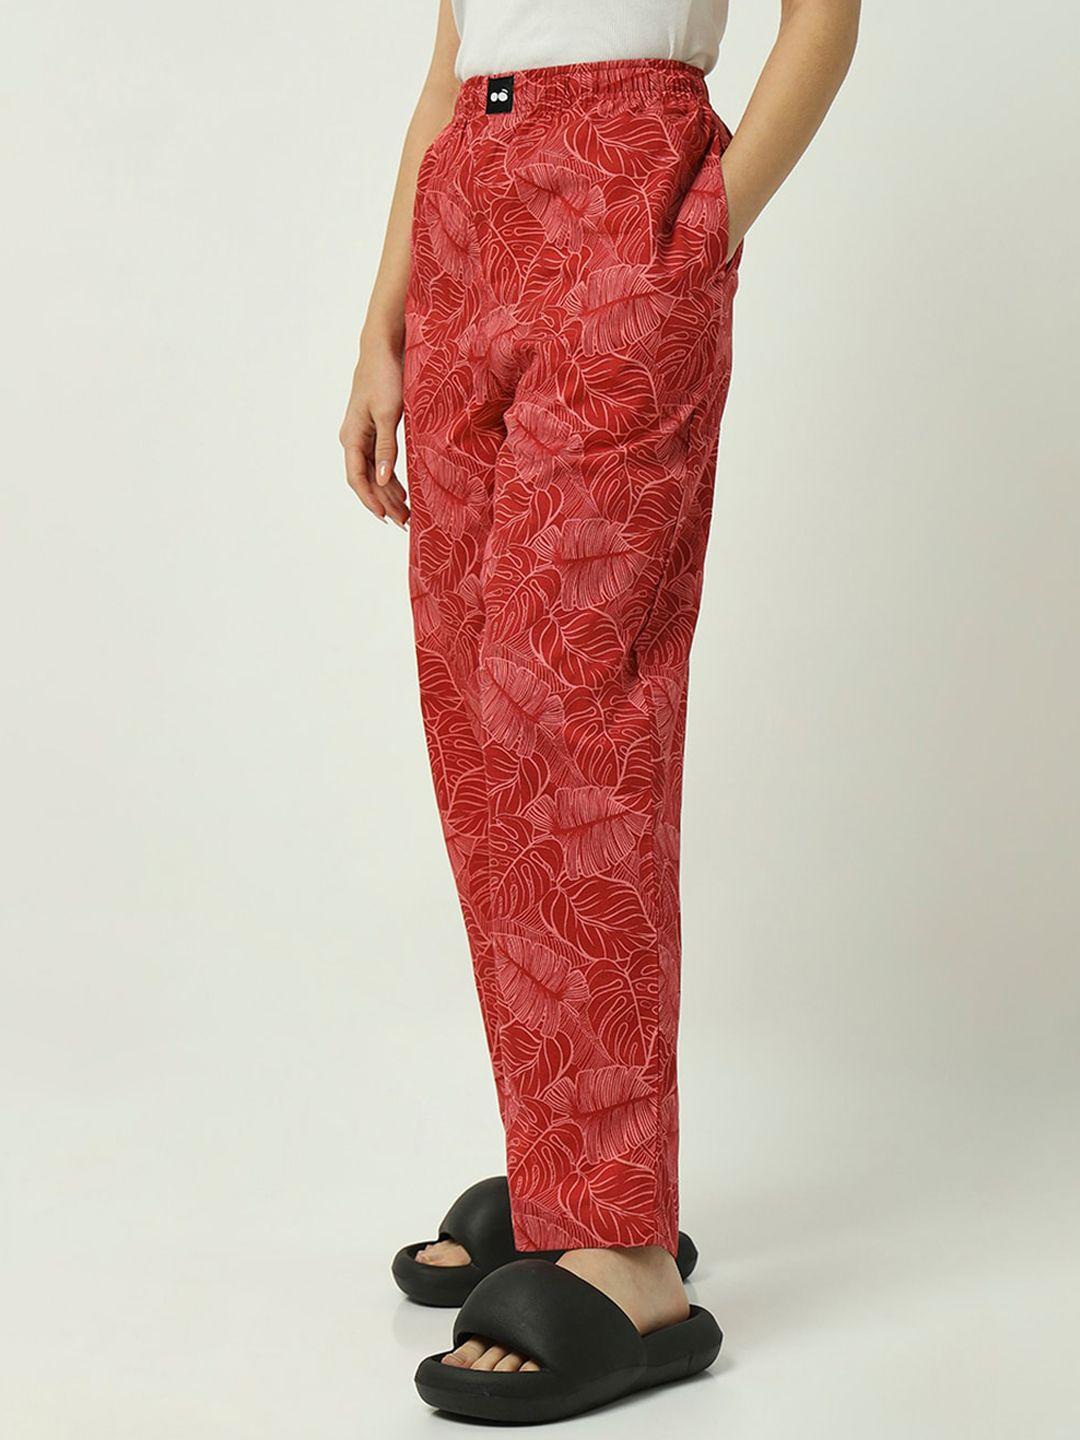 bewakoof women red mid-rise printed cotton lounge pants